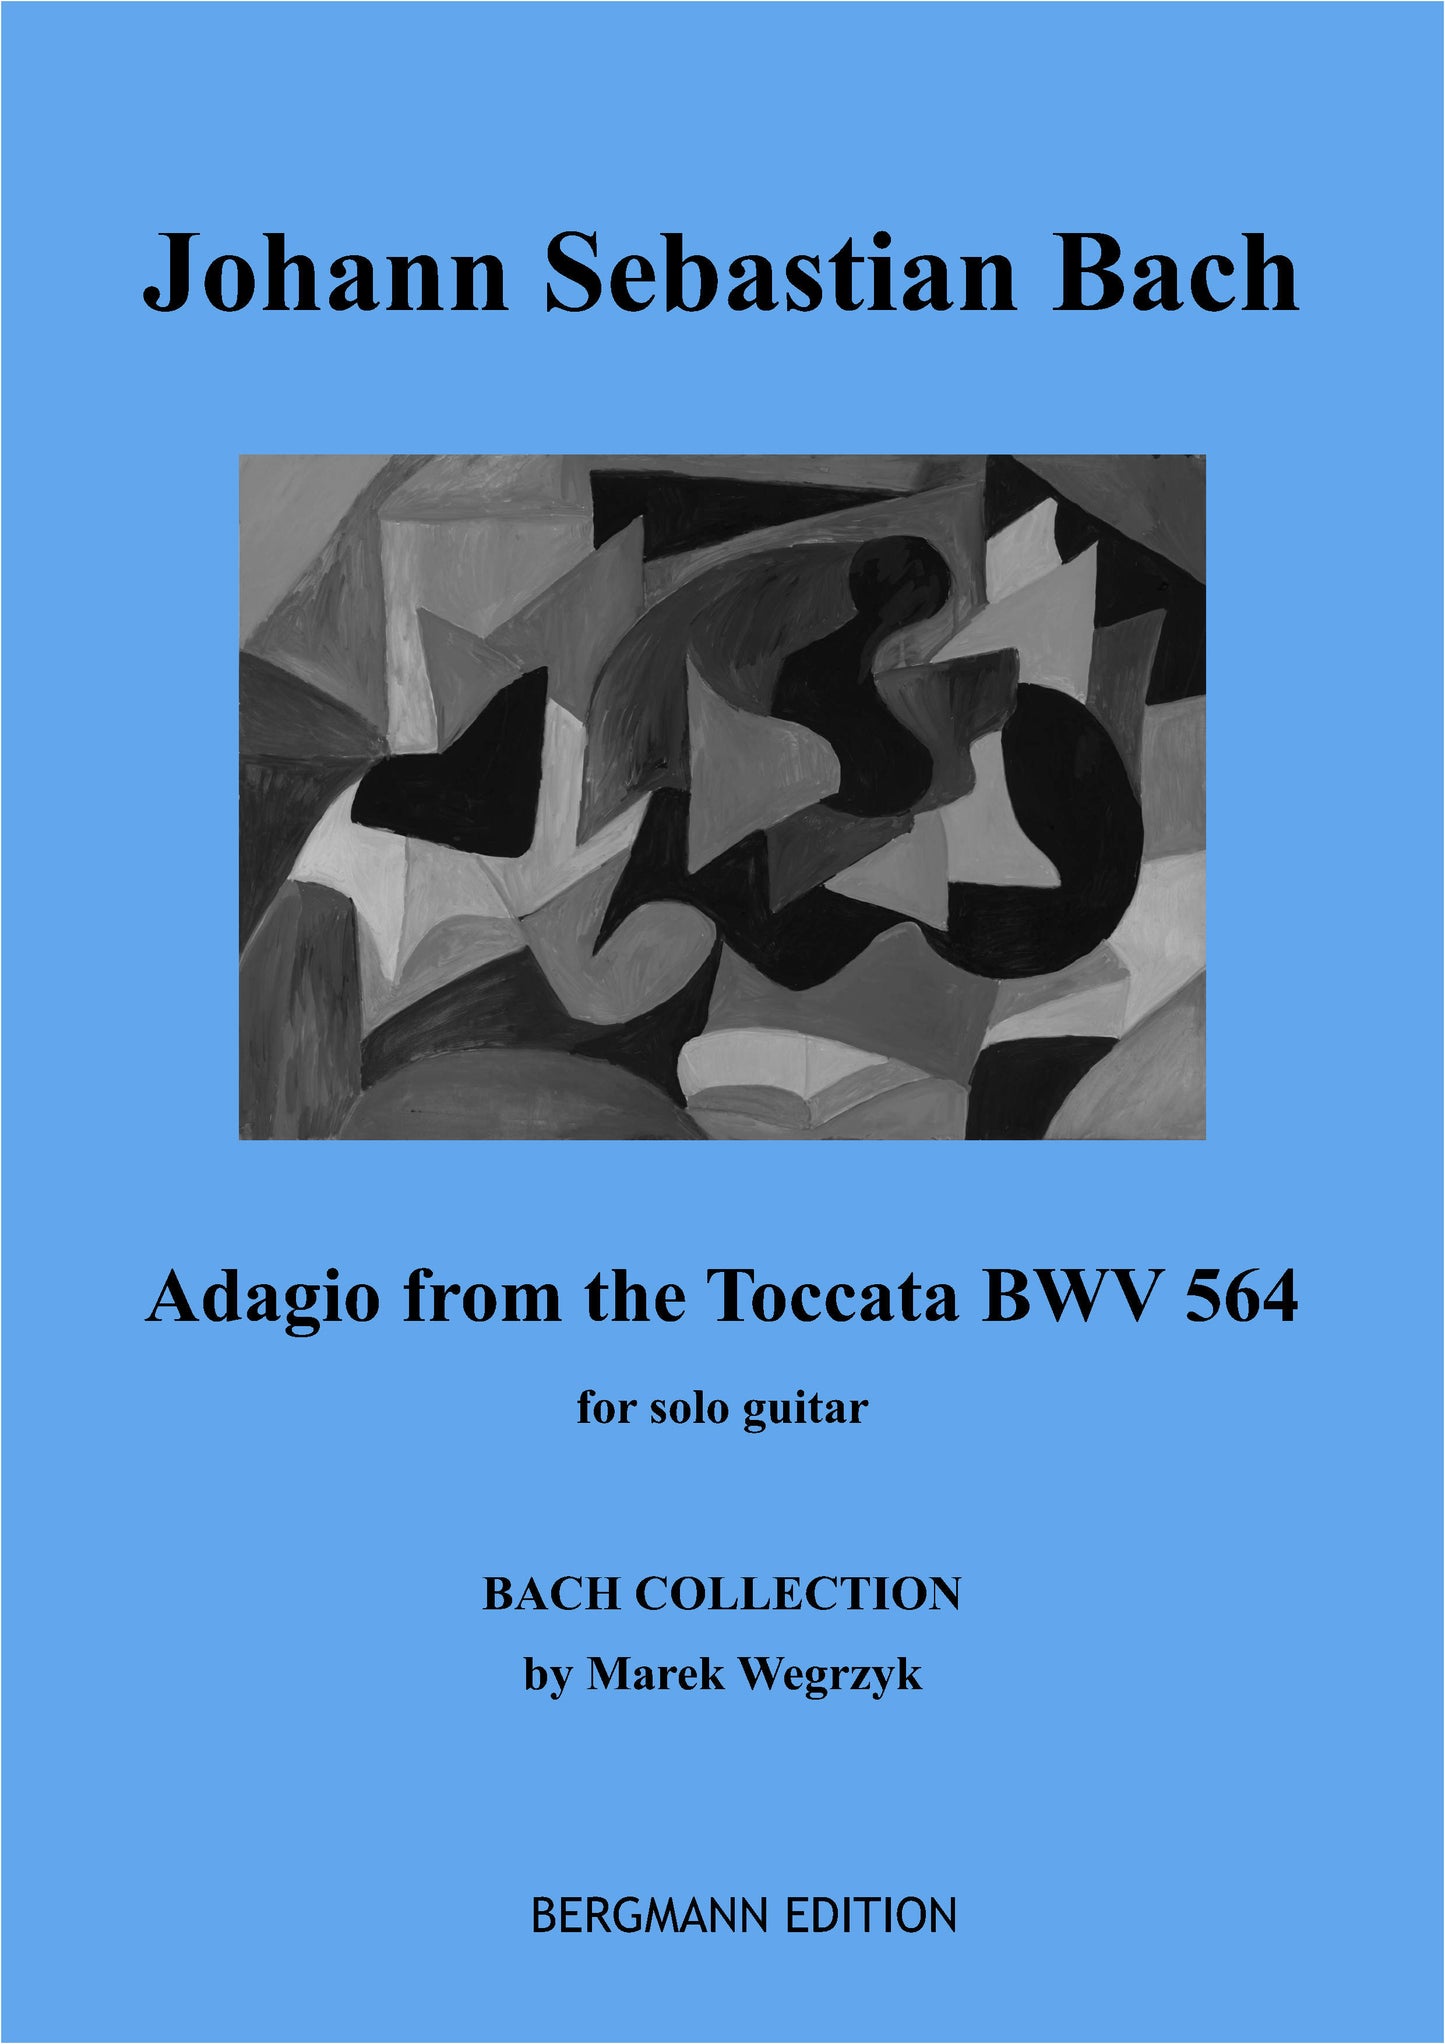 Bach-Wegrzyk, Adagio from the Toccata BWV 564